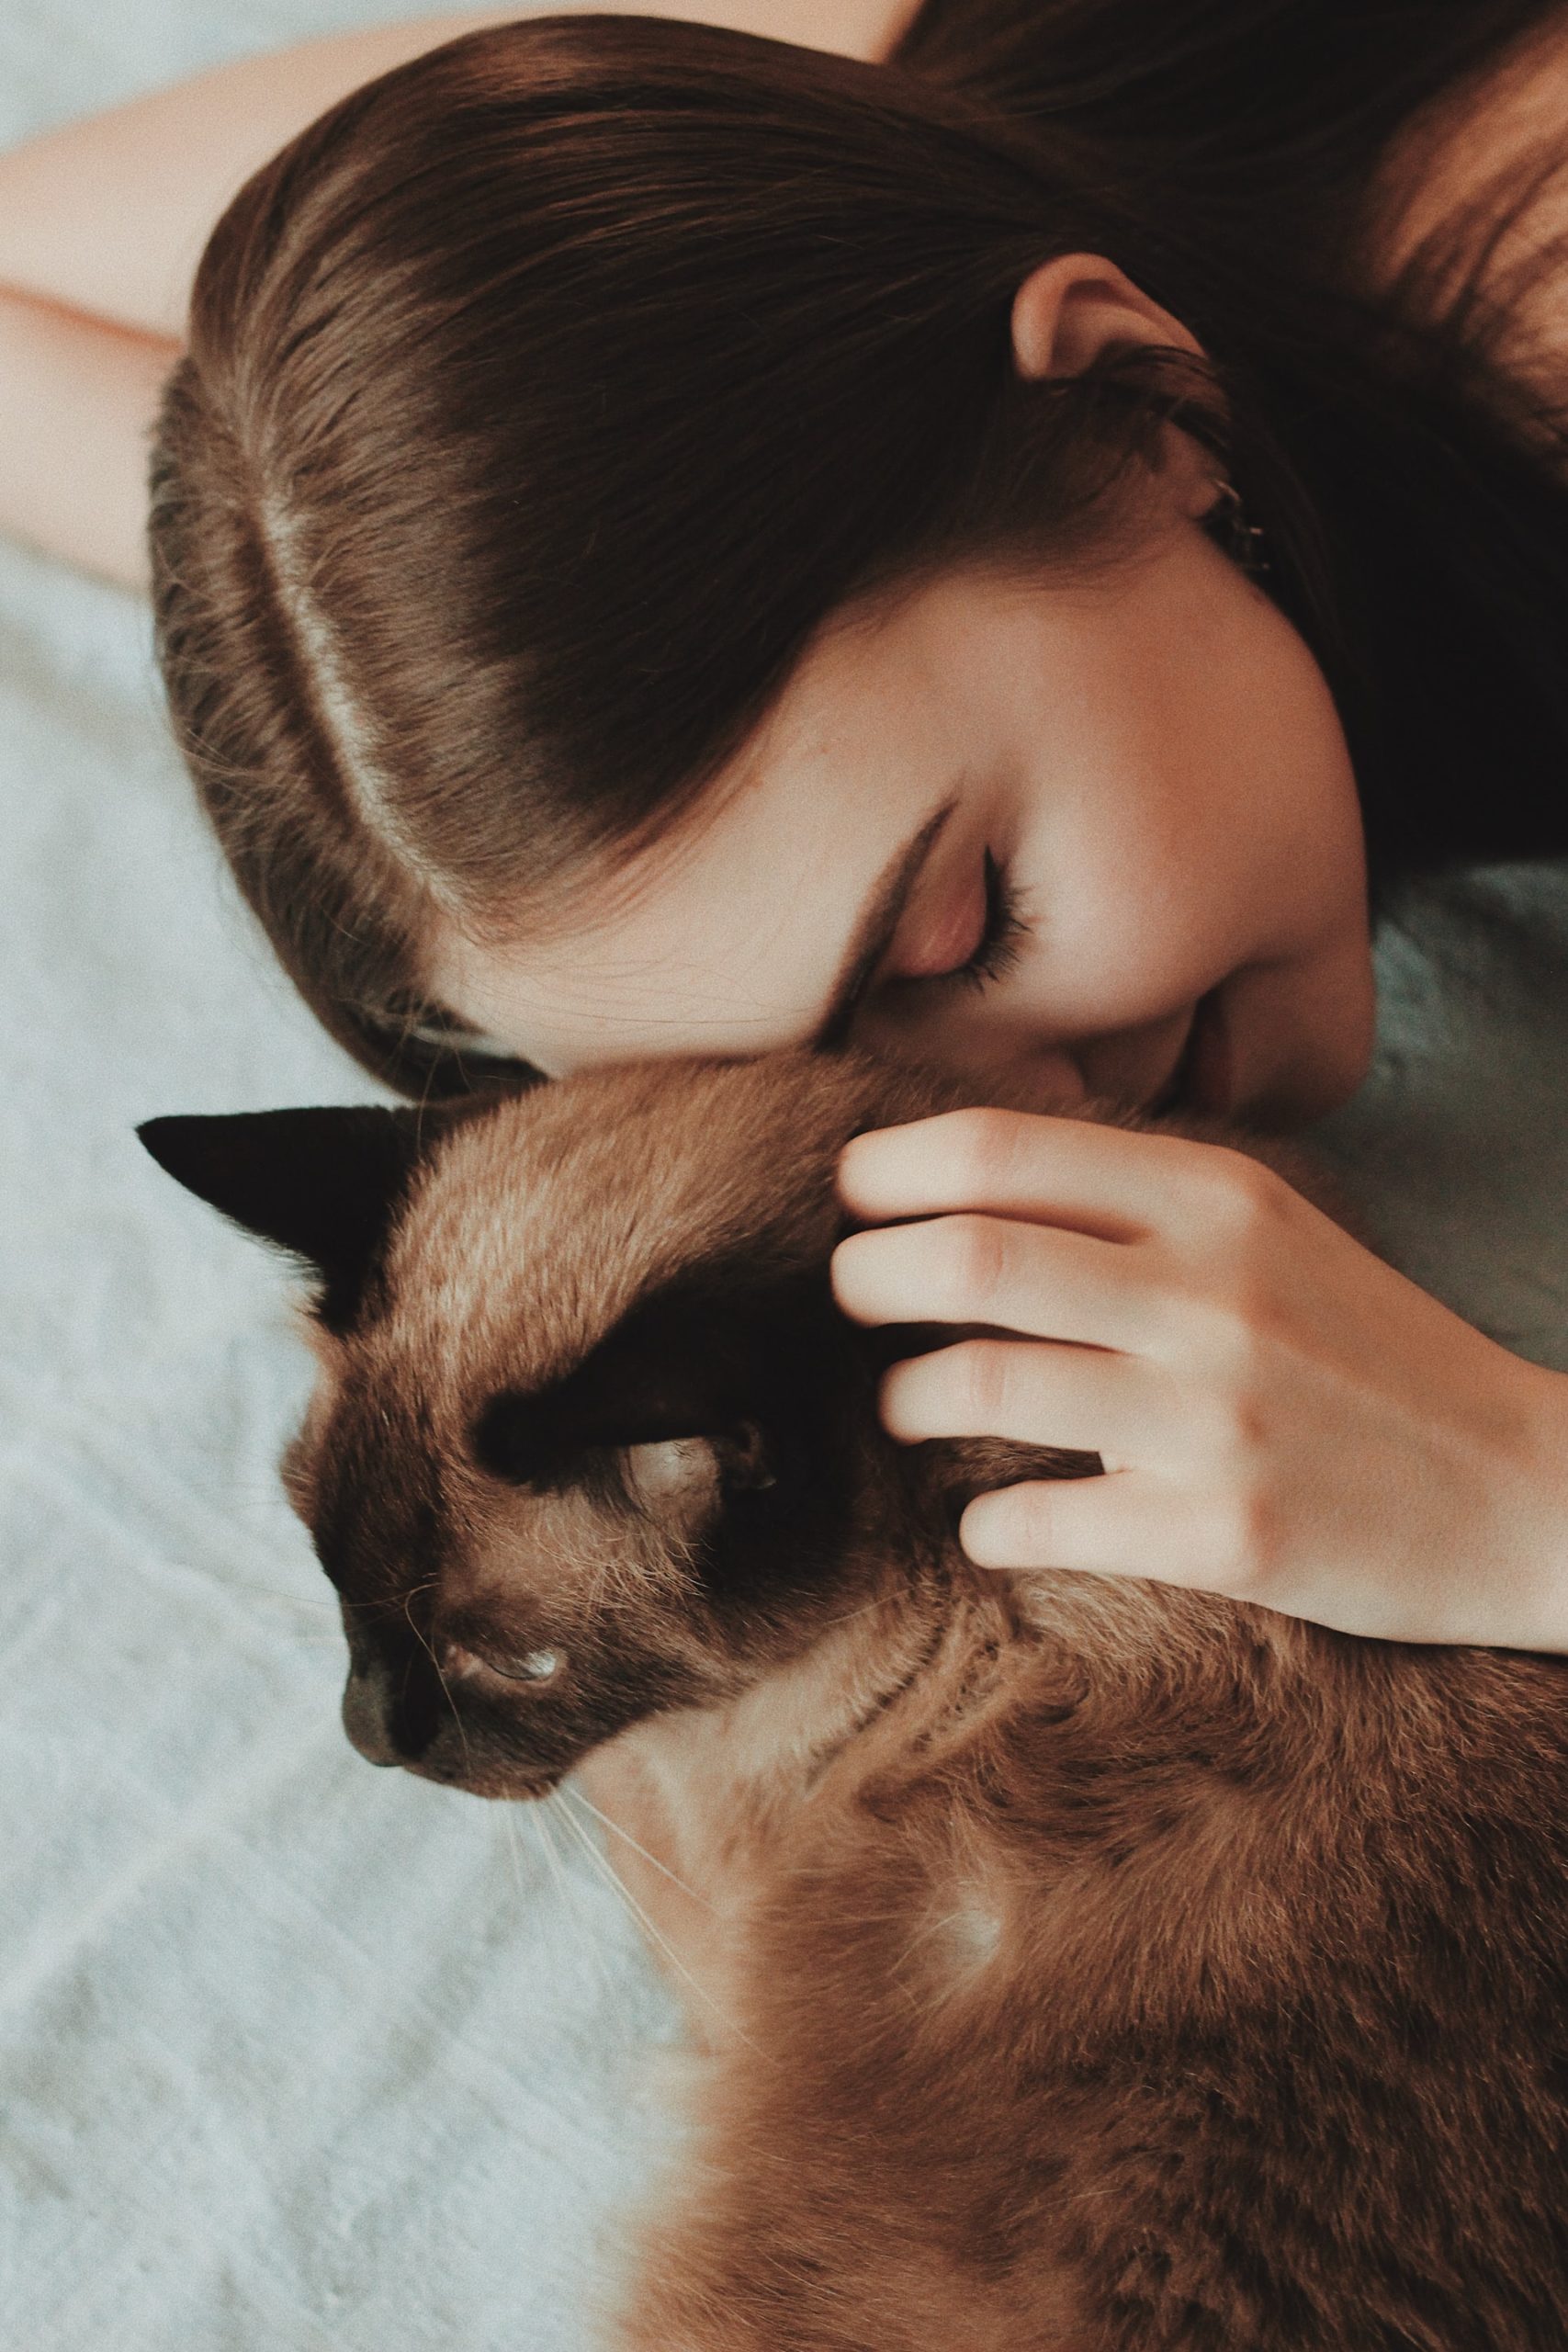 Cuddling Your Cat